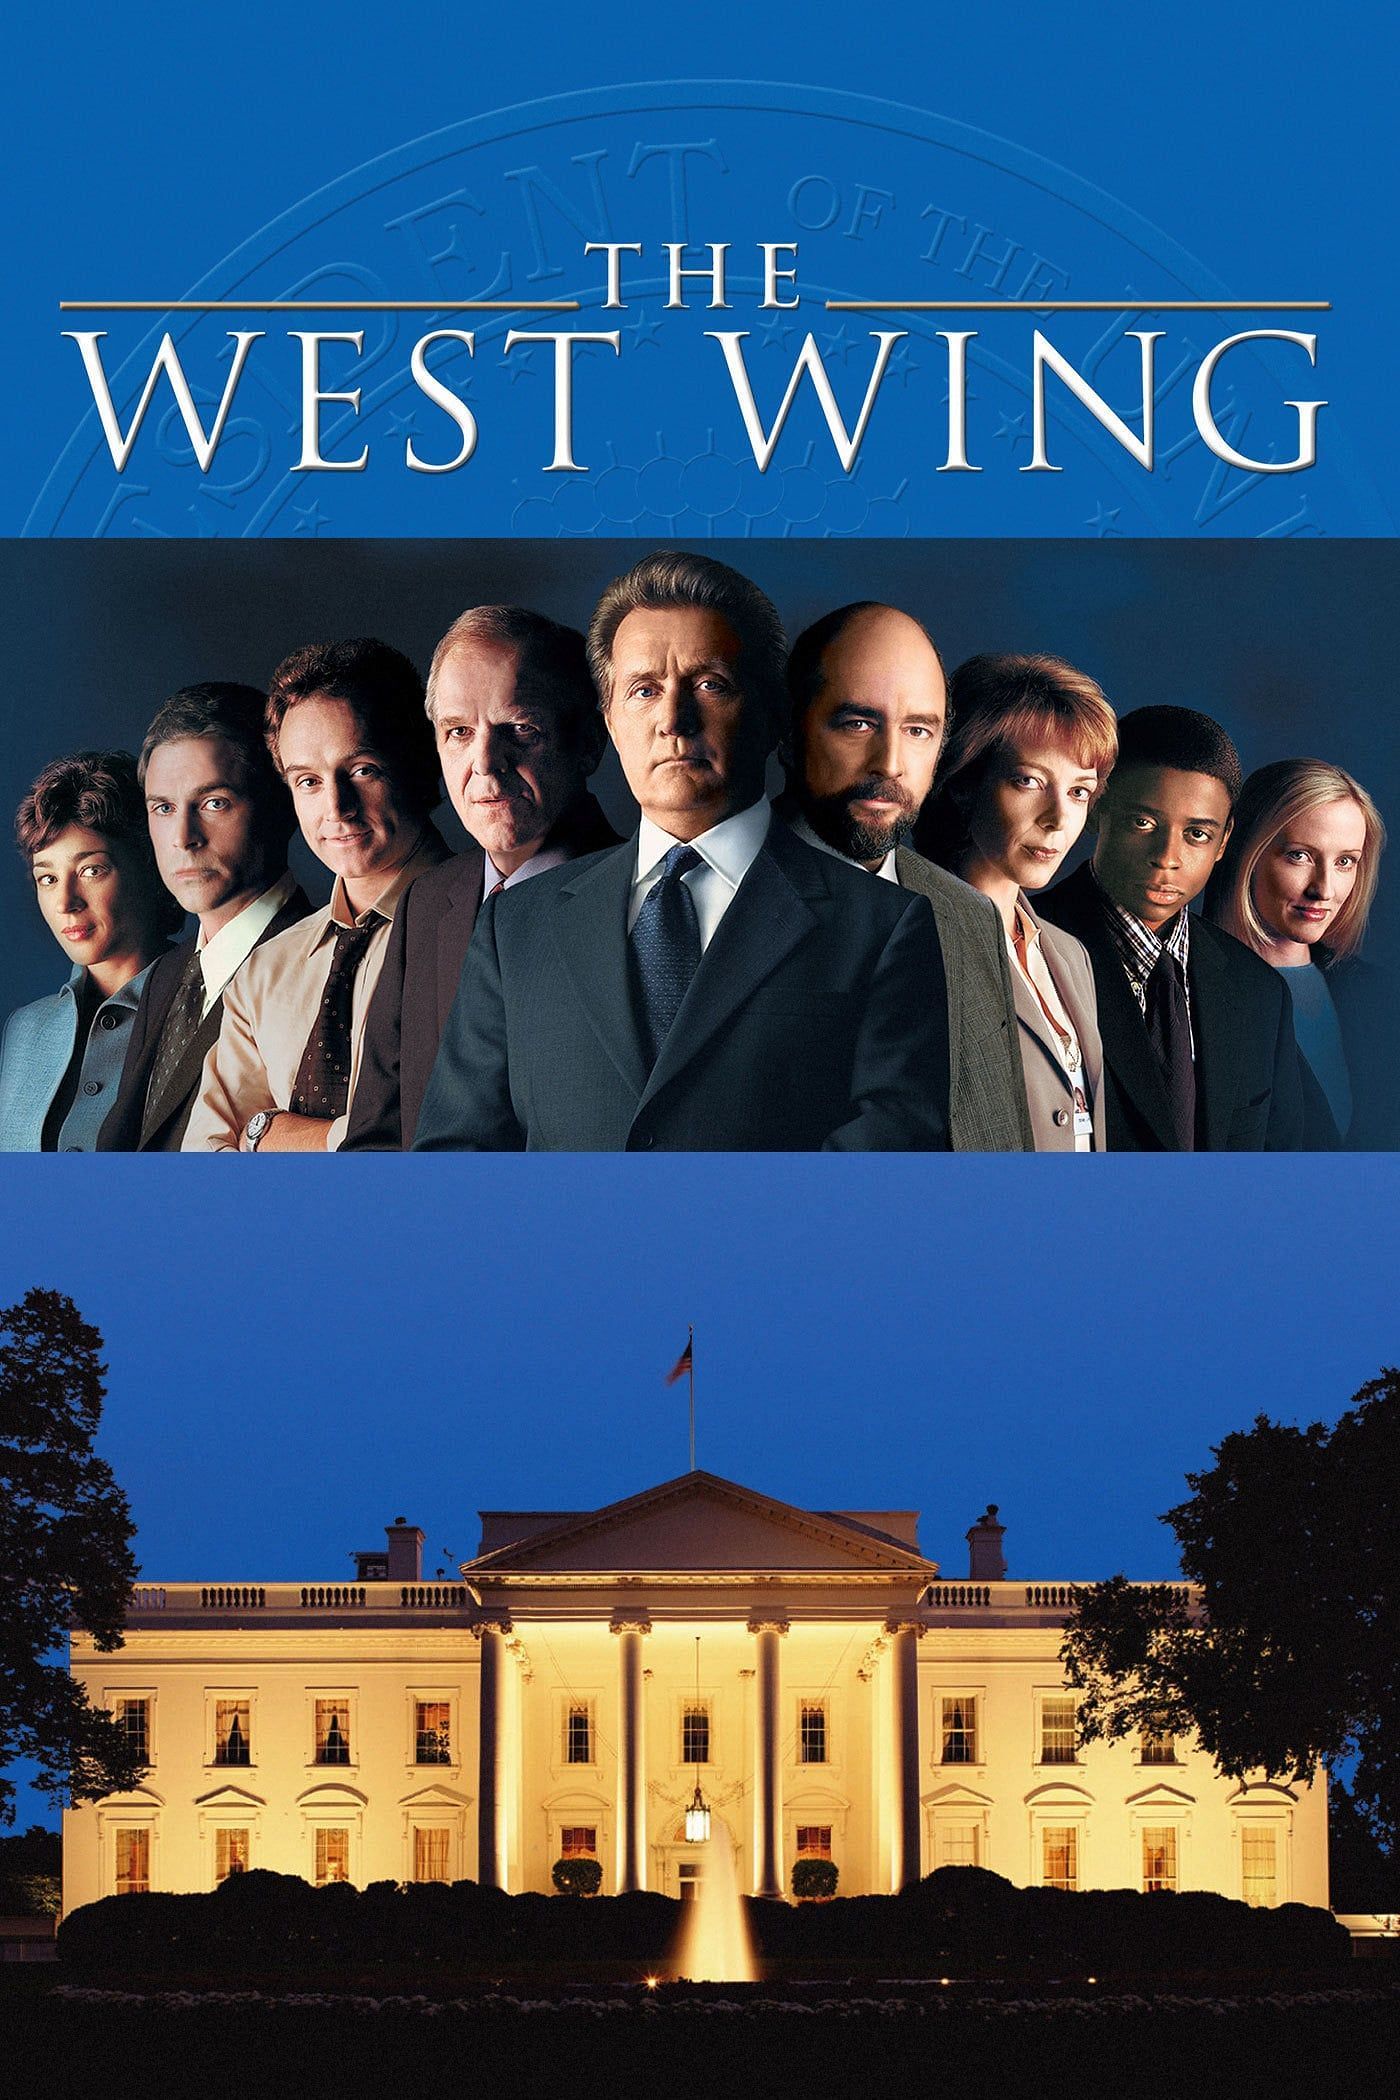 The West Wing (Image via IMDB.com)